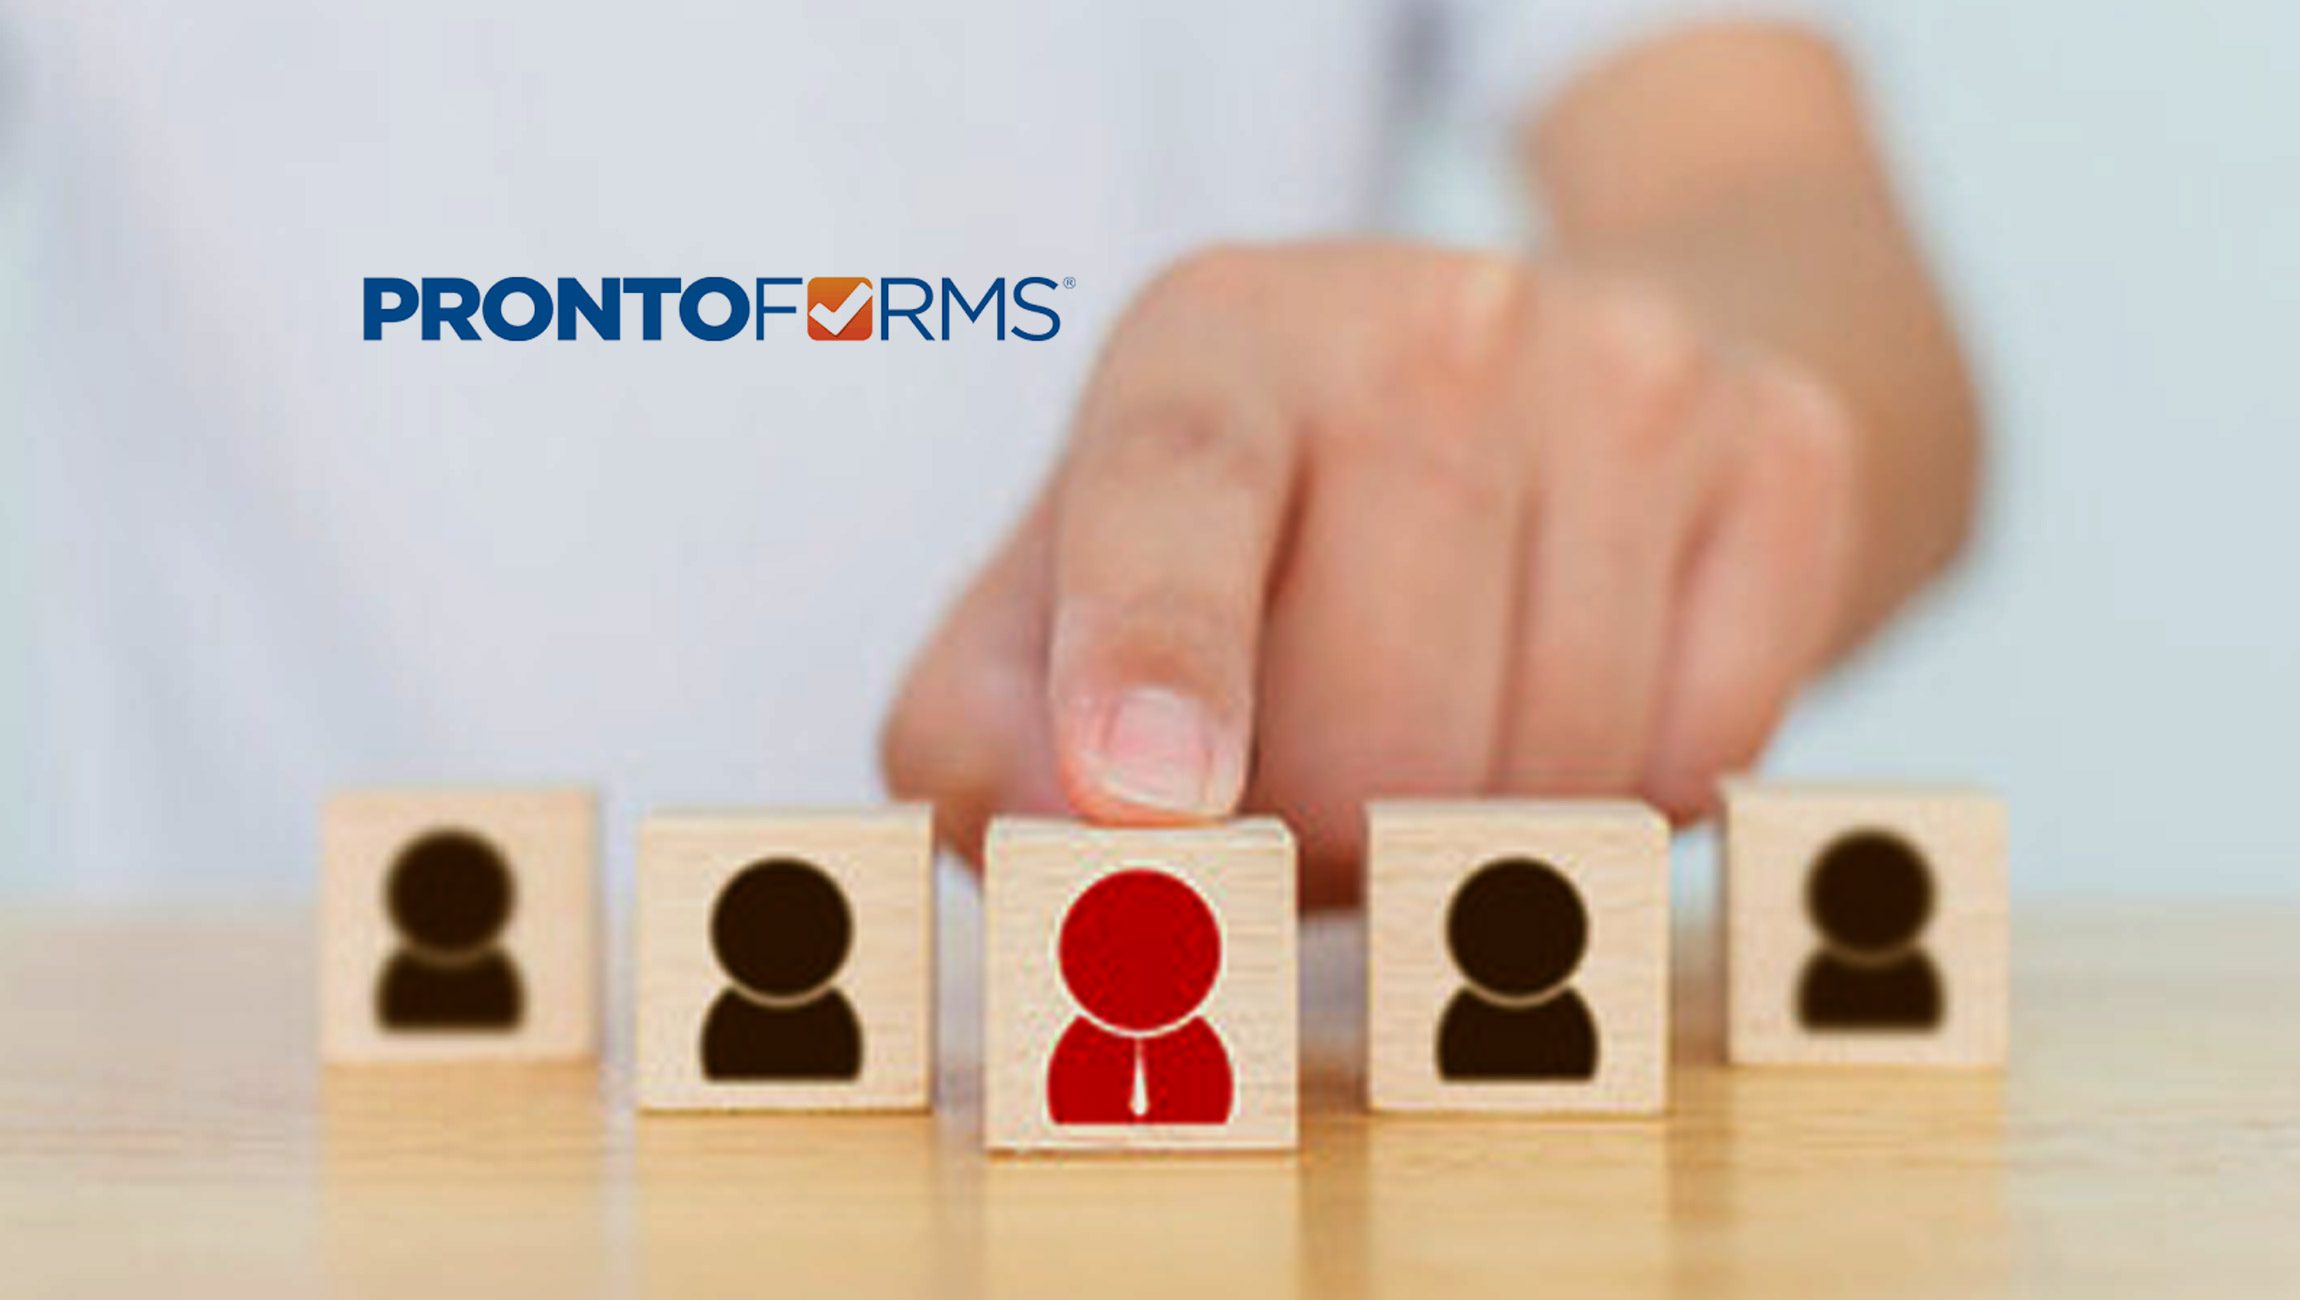 ProntoForms Announces Management and Board Changes